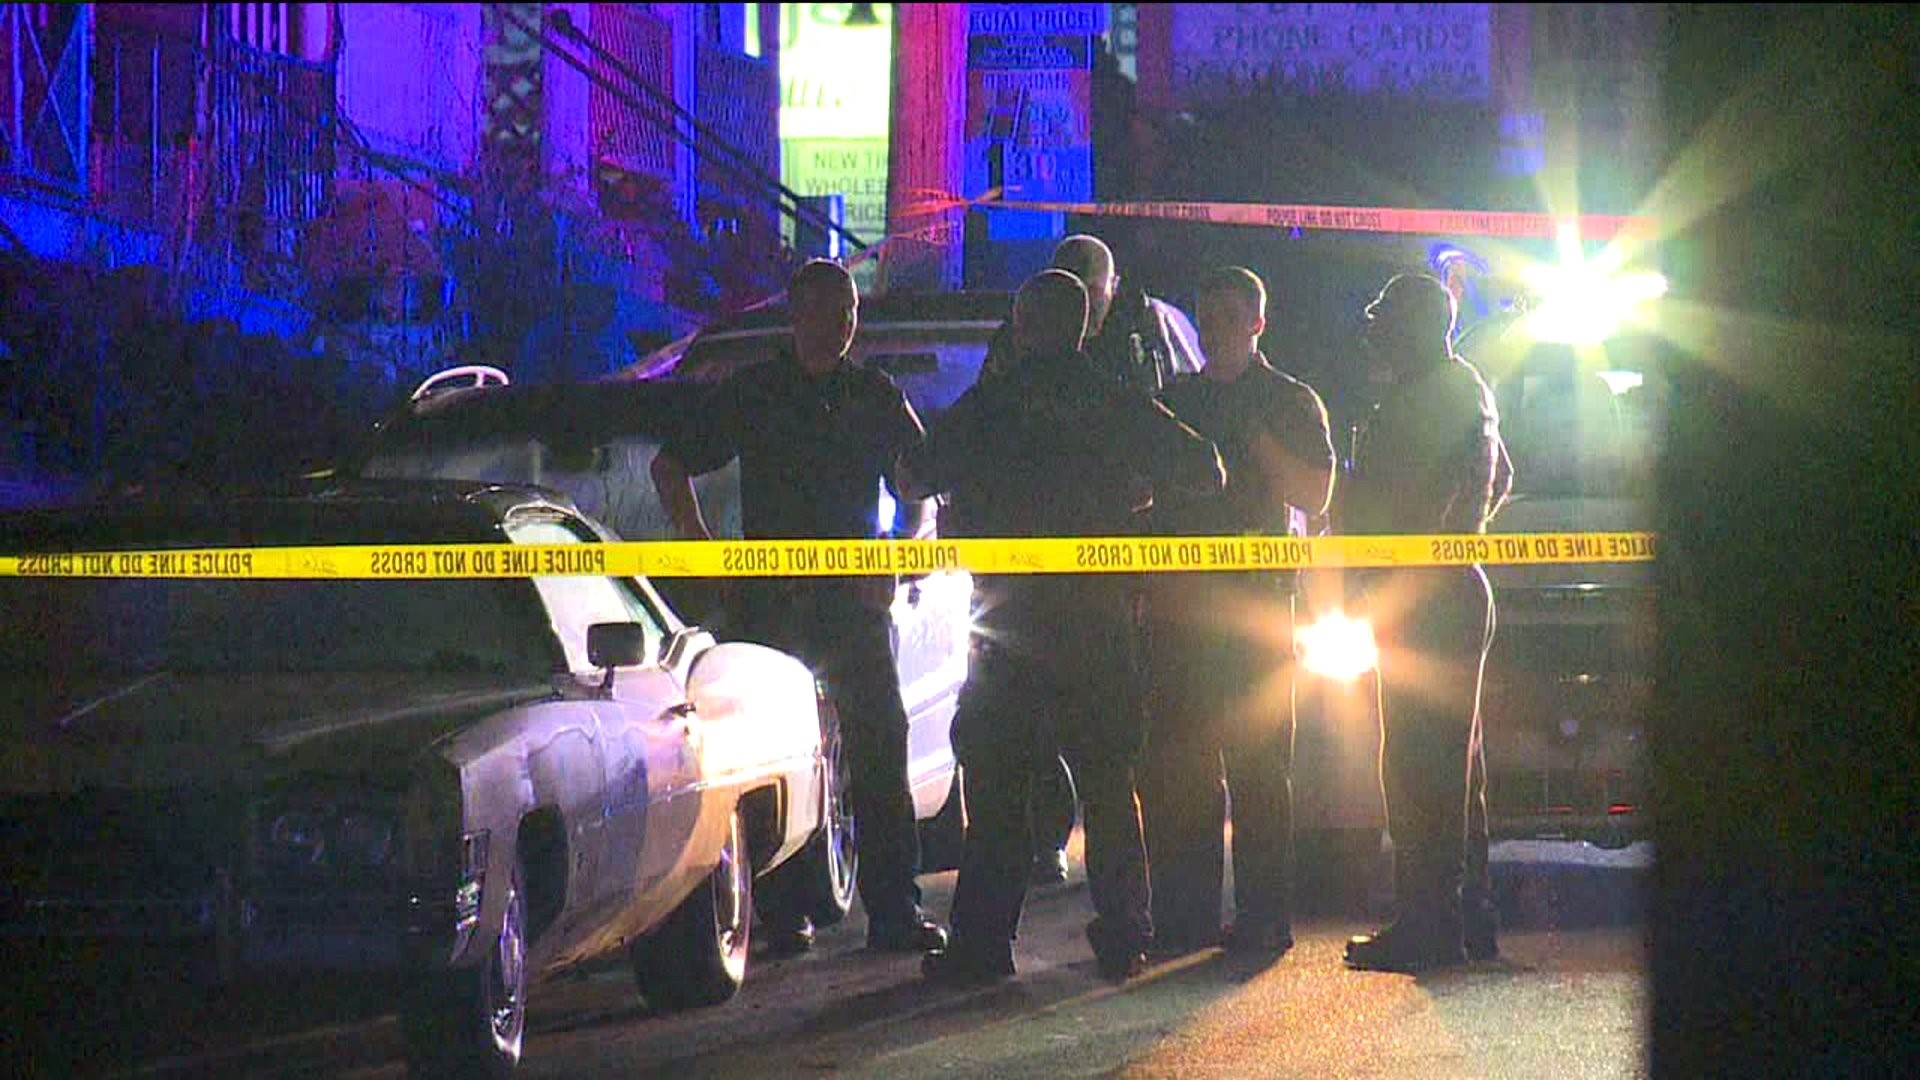 Police Investigate Shooting in Wilkes-Barre